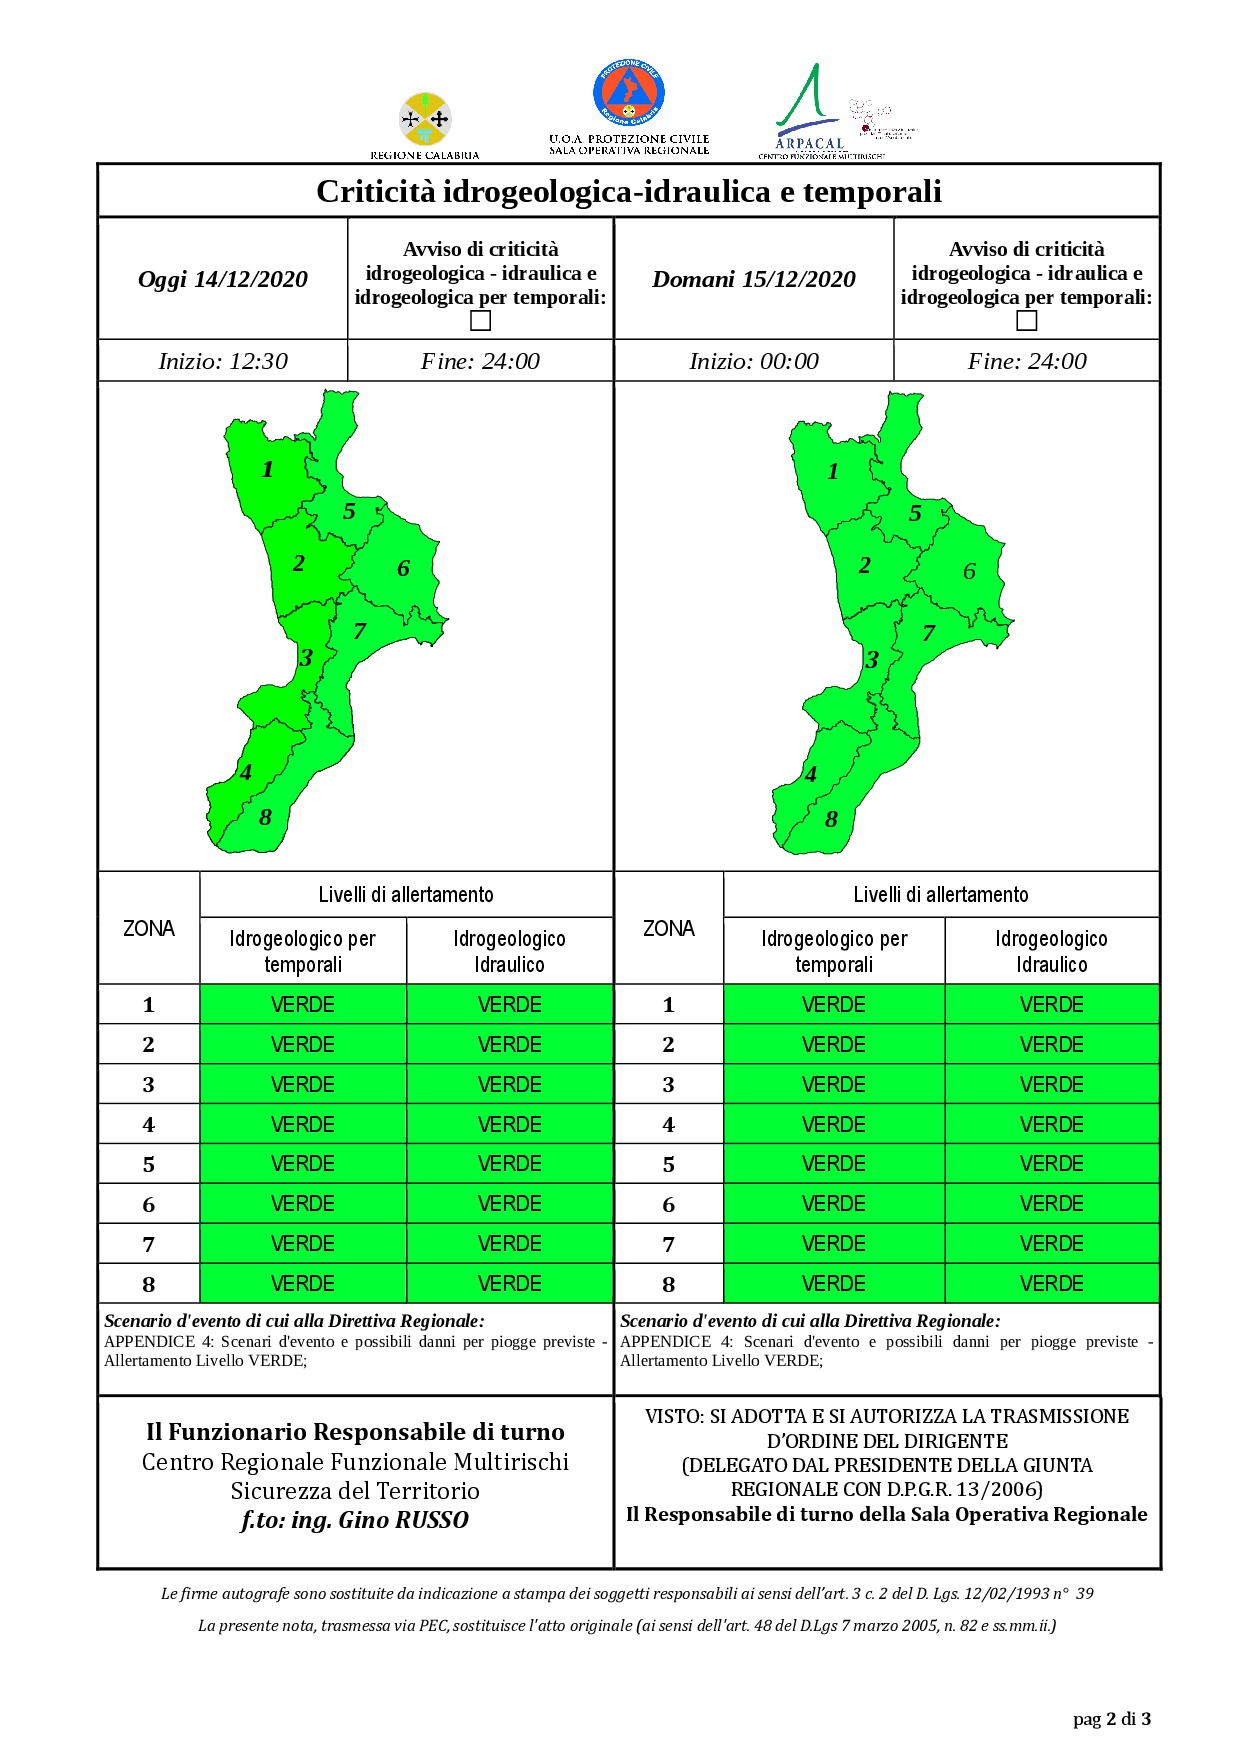 Criticità idrogeologica-idraulica e temporali in Calabria 14-12-2020